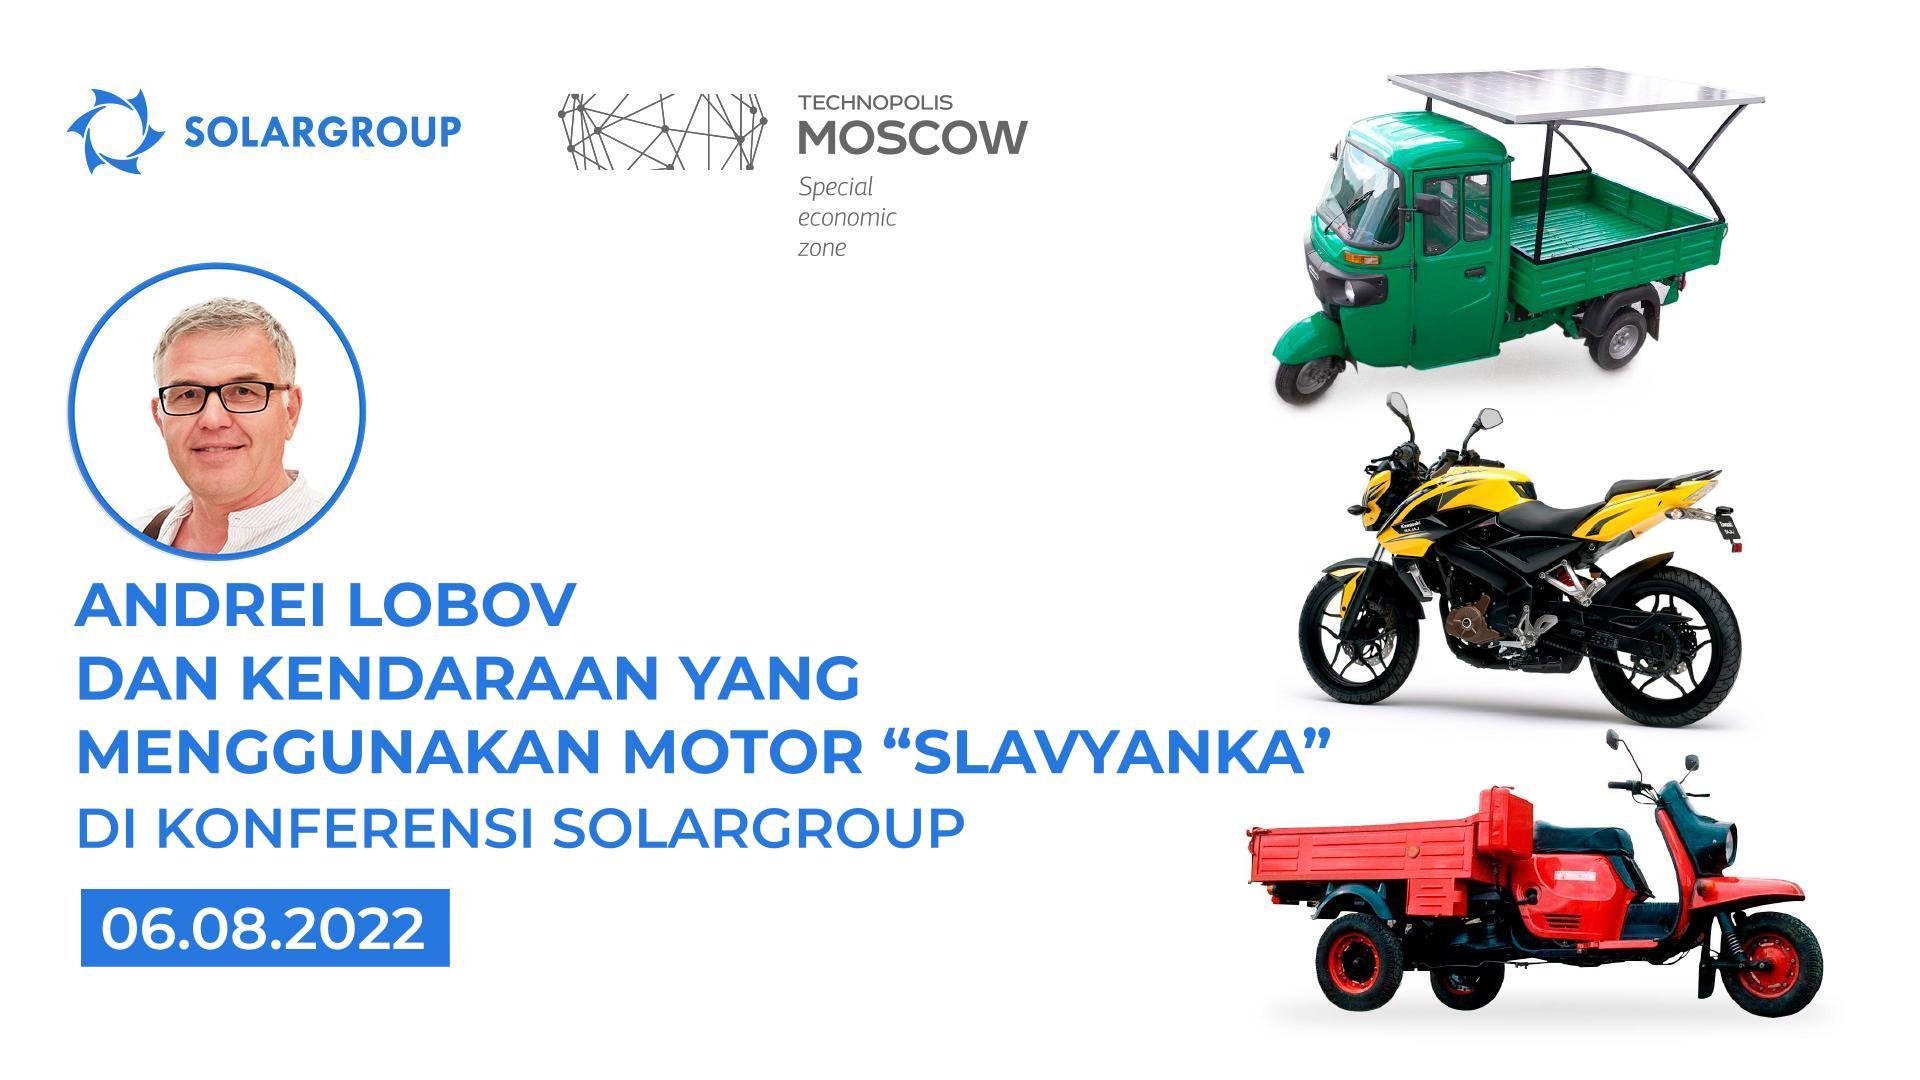 Andrey Lobov dan galeri kendaraan yang menggunakan motor "Slavyanka"